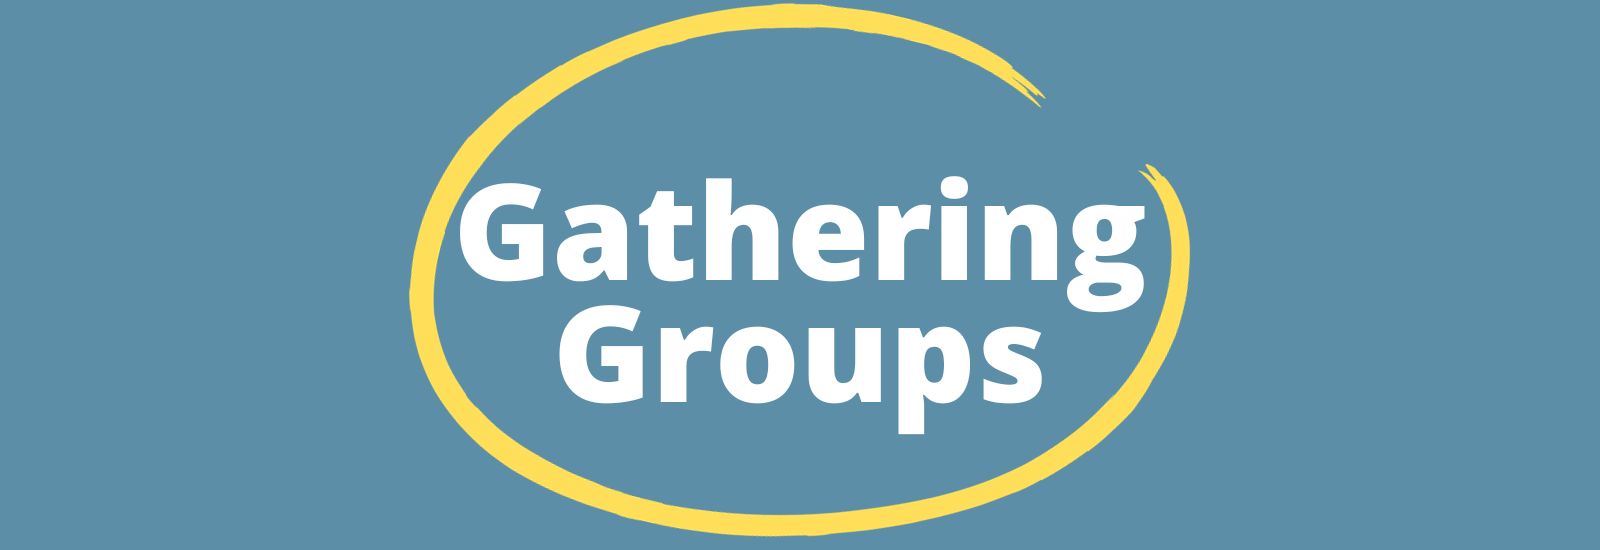 Gathering Groups Presentation (1600 x 550 px)